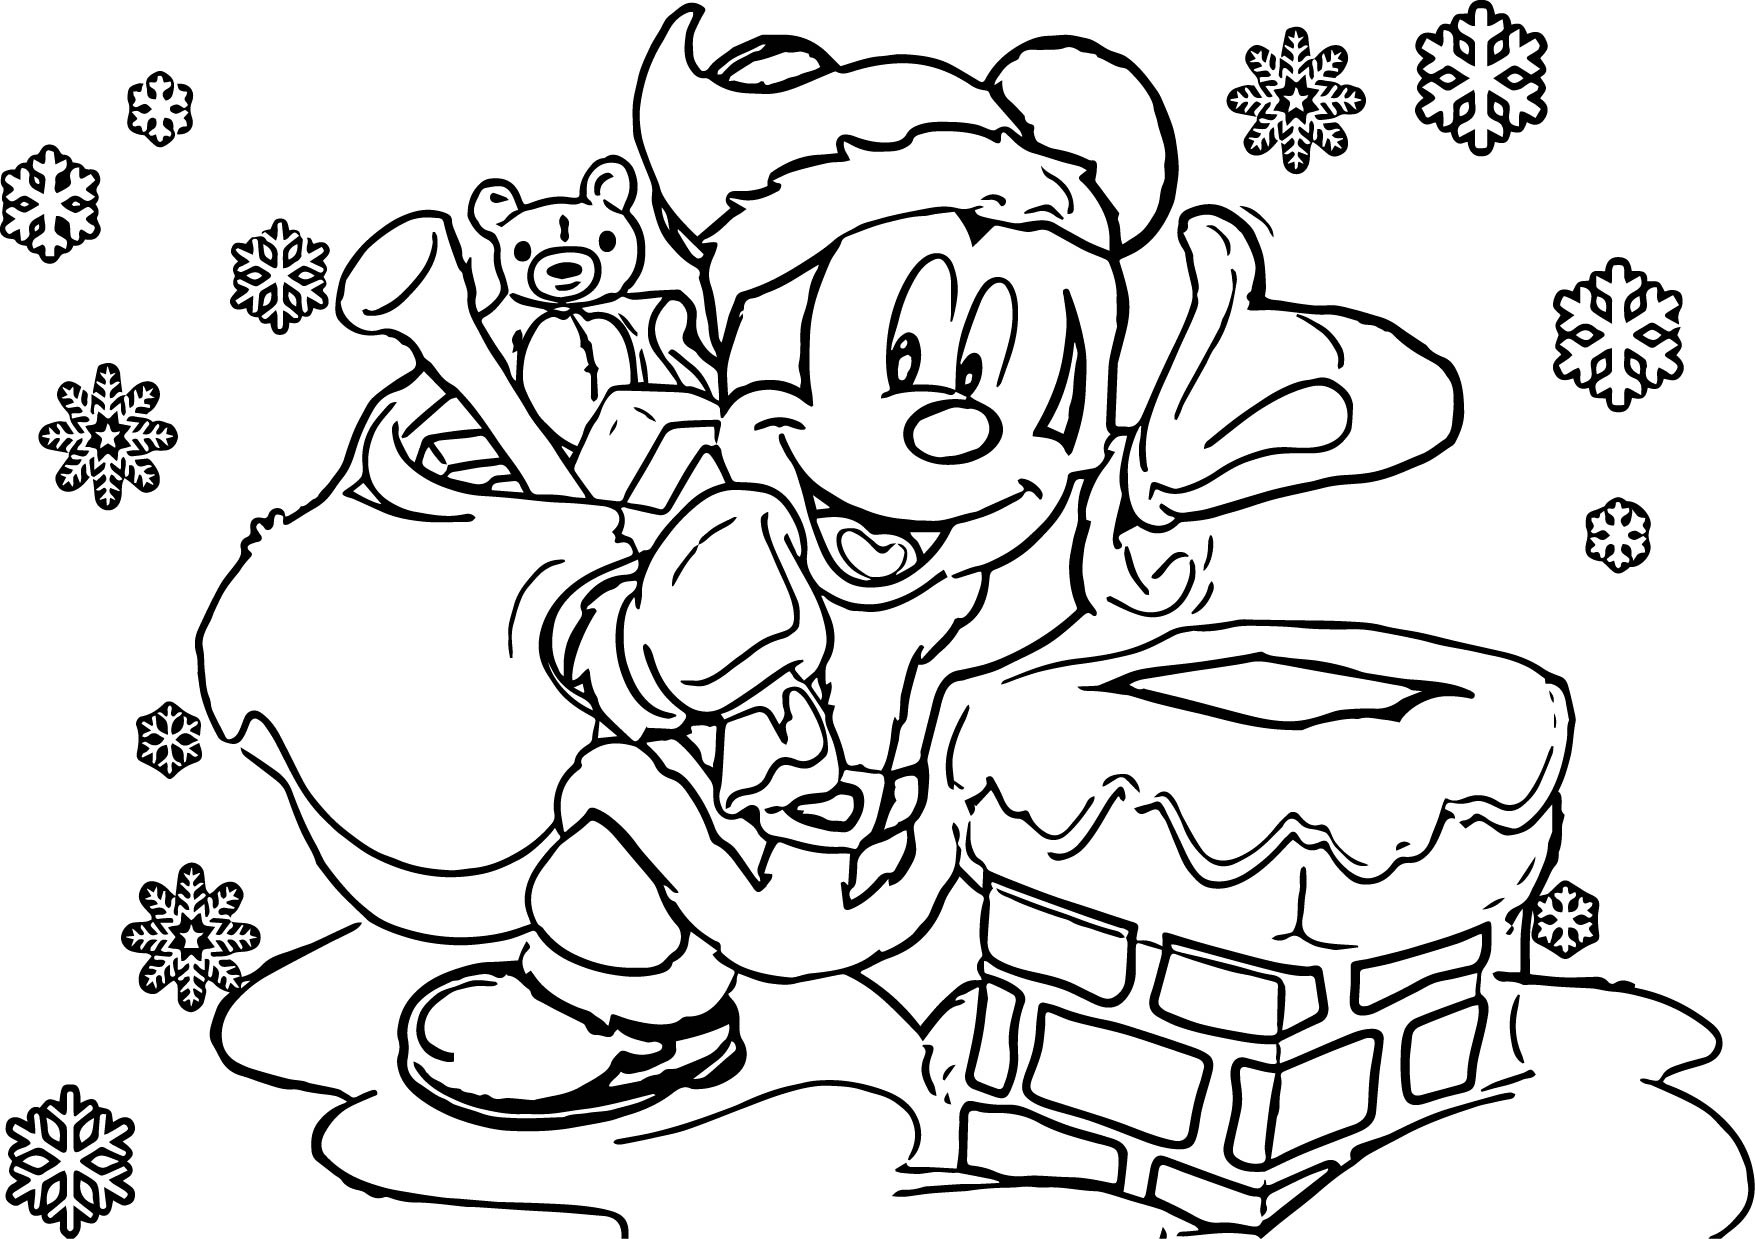 Christmas Cartoon Characters Coloring Pages at ...